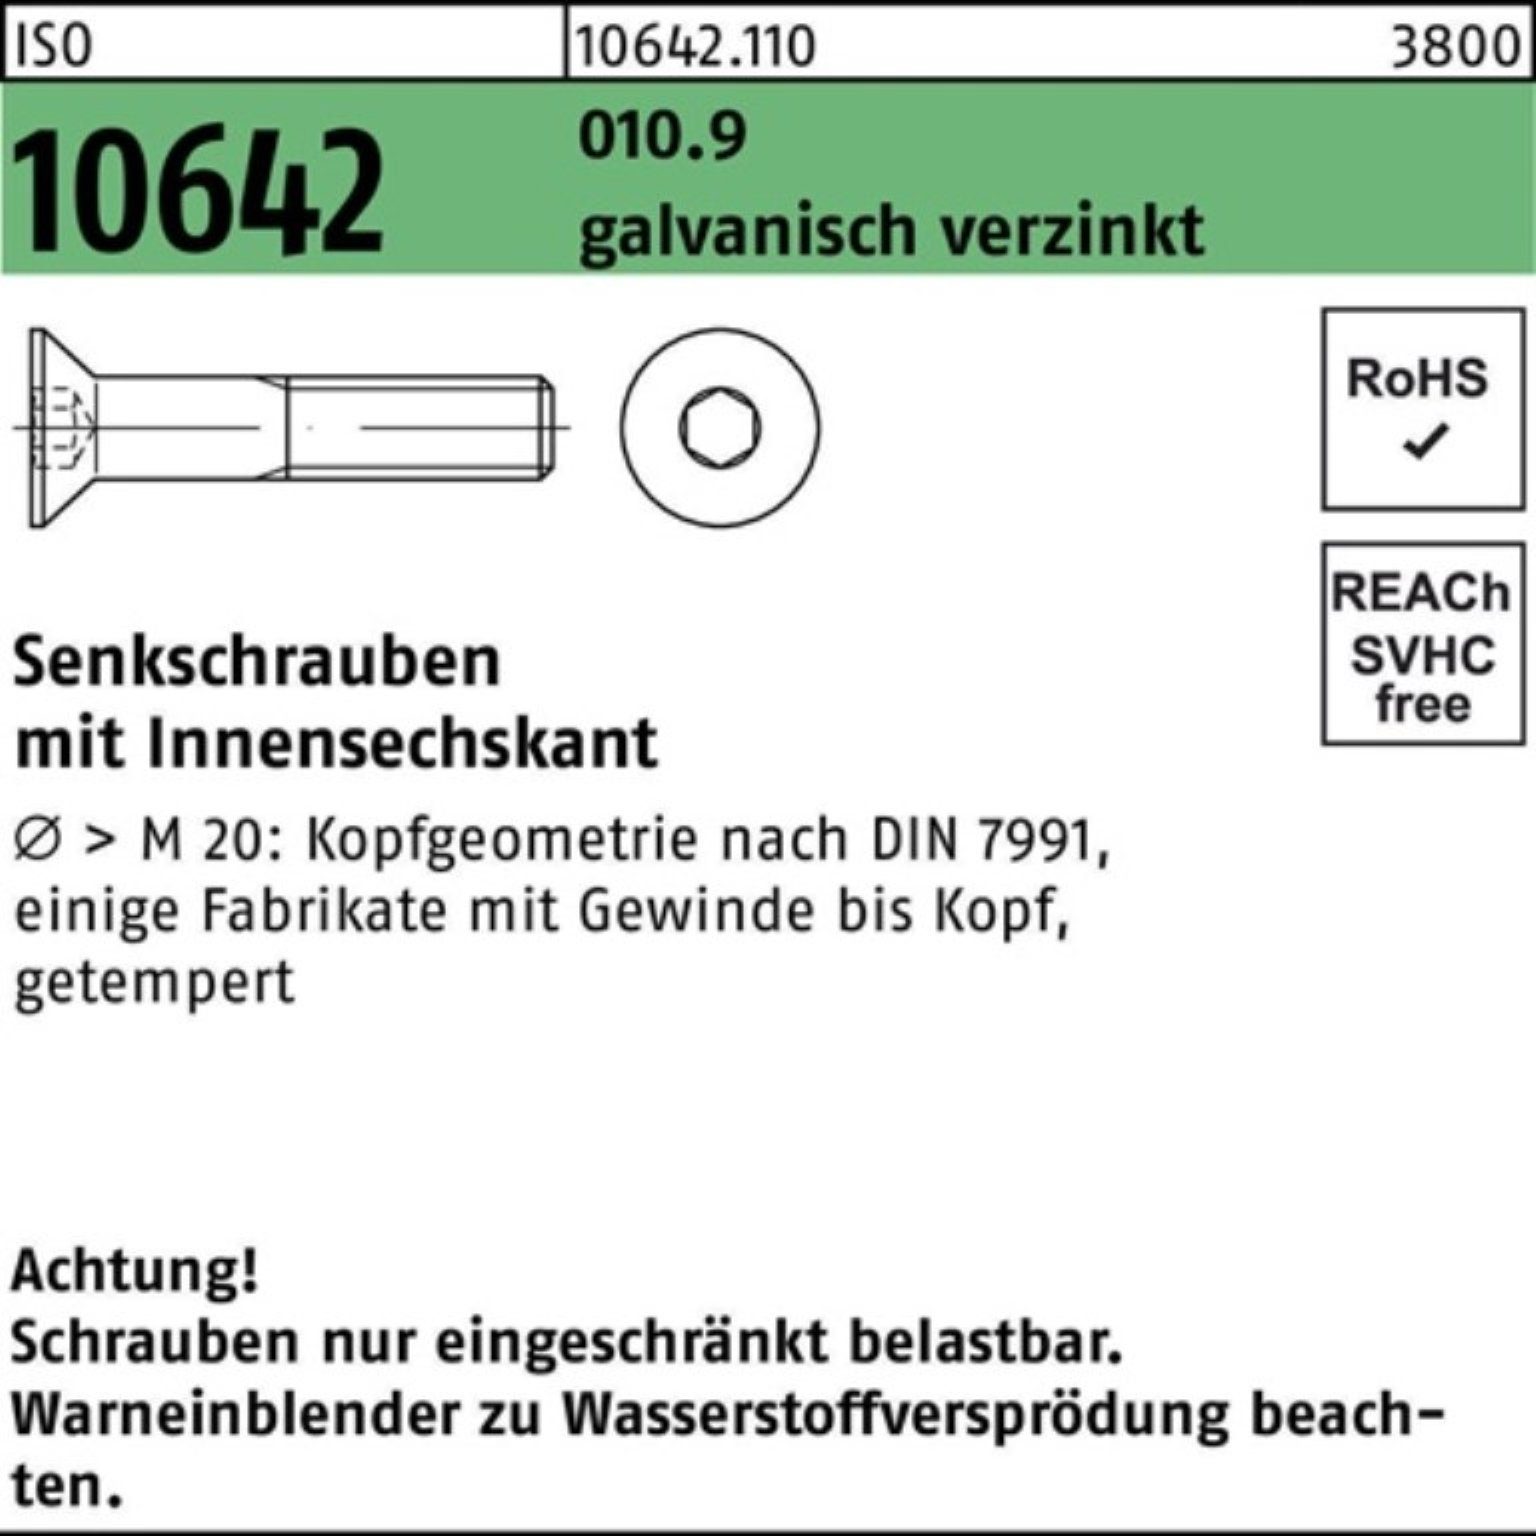 Reyher Senkschraube 500er Pack Senkschraube M5x 010.9 galv.verz. 10642 30 Innen-6kt ISO 50